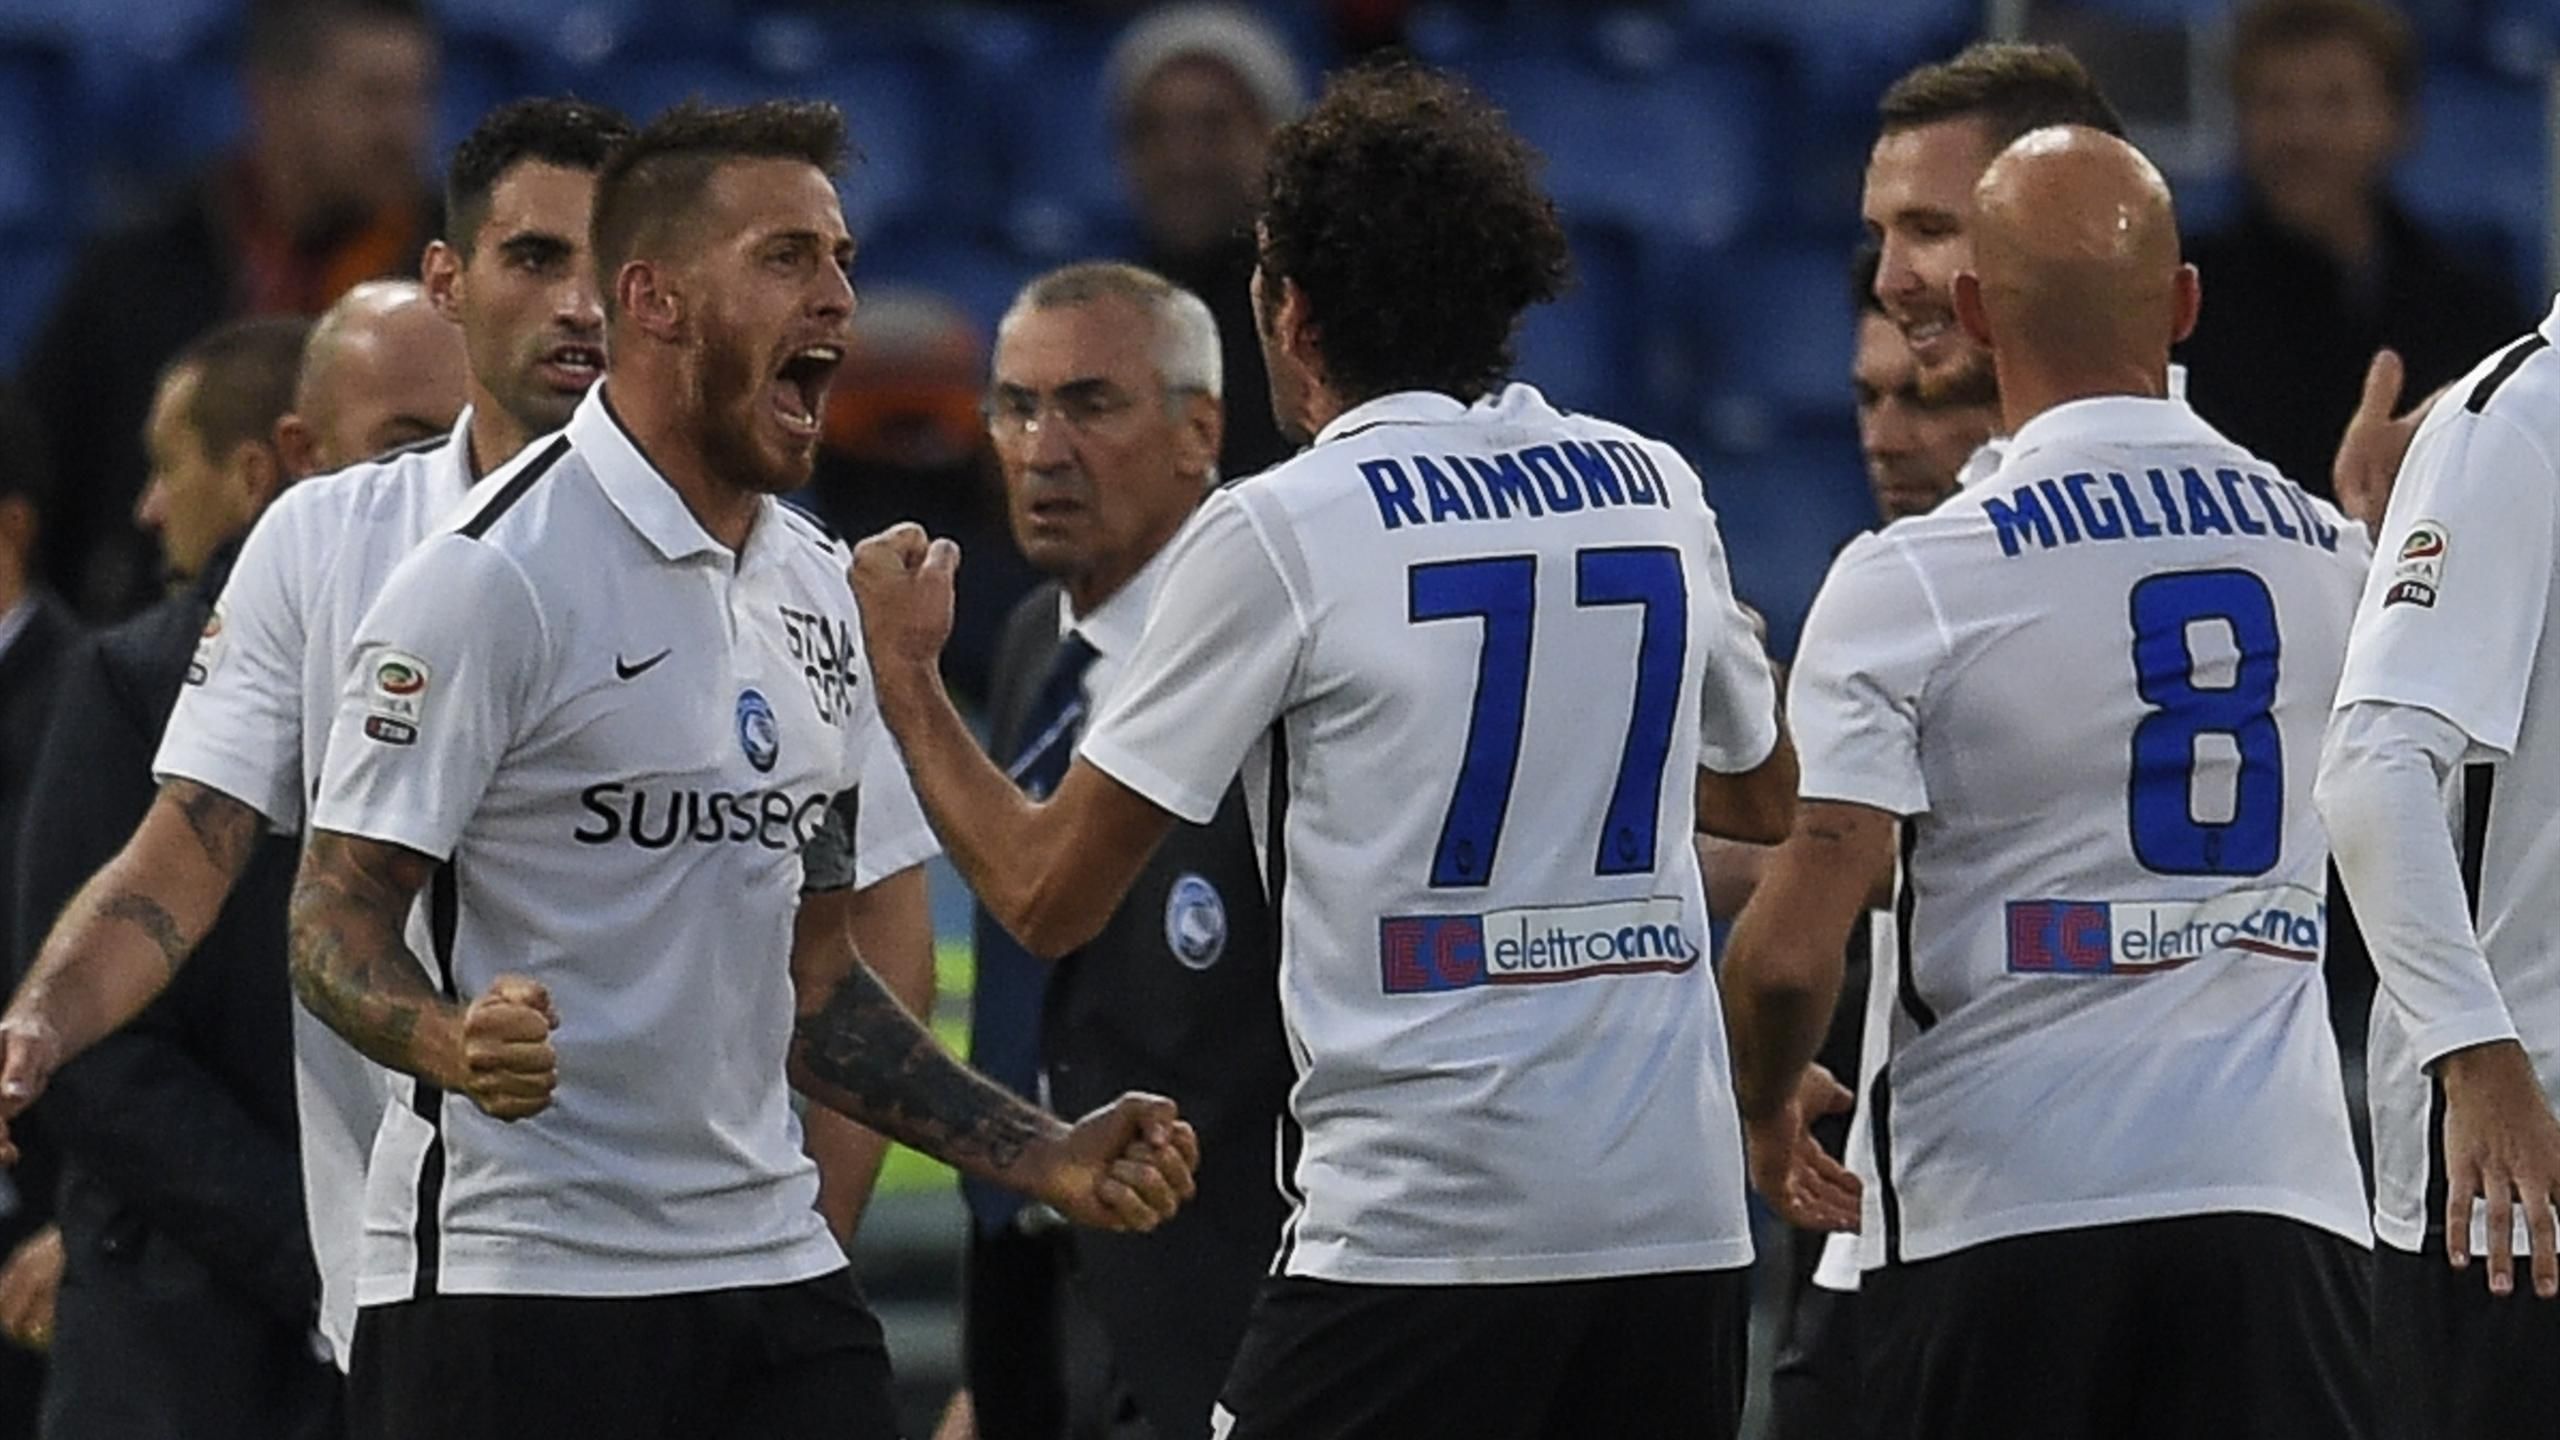 Atalanta draw with Palermo - Eurosport